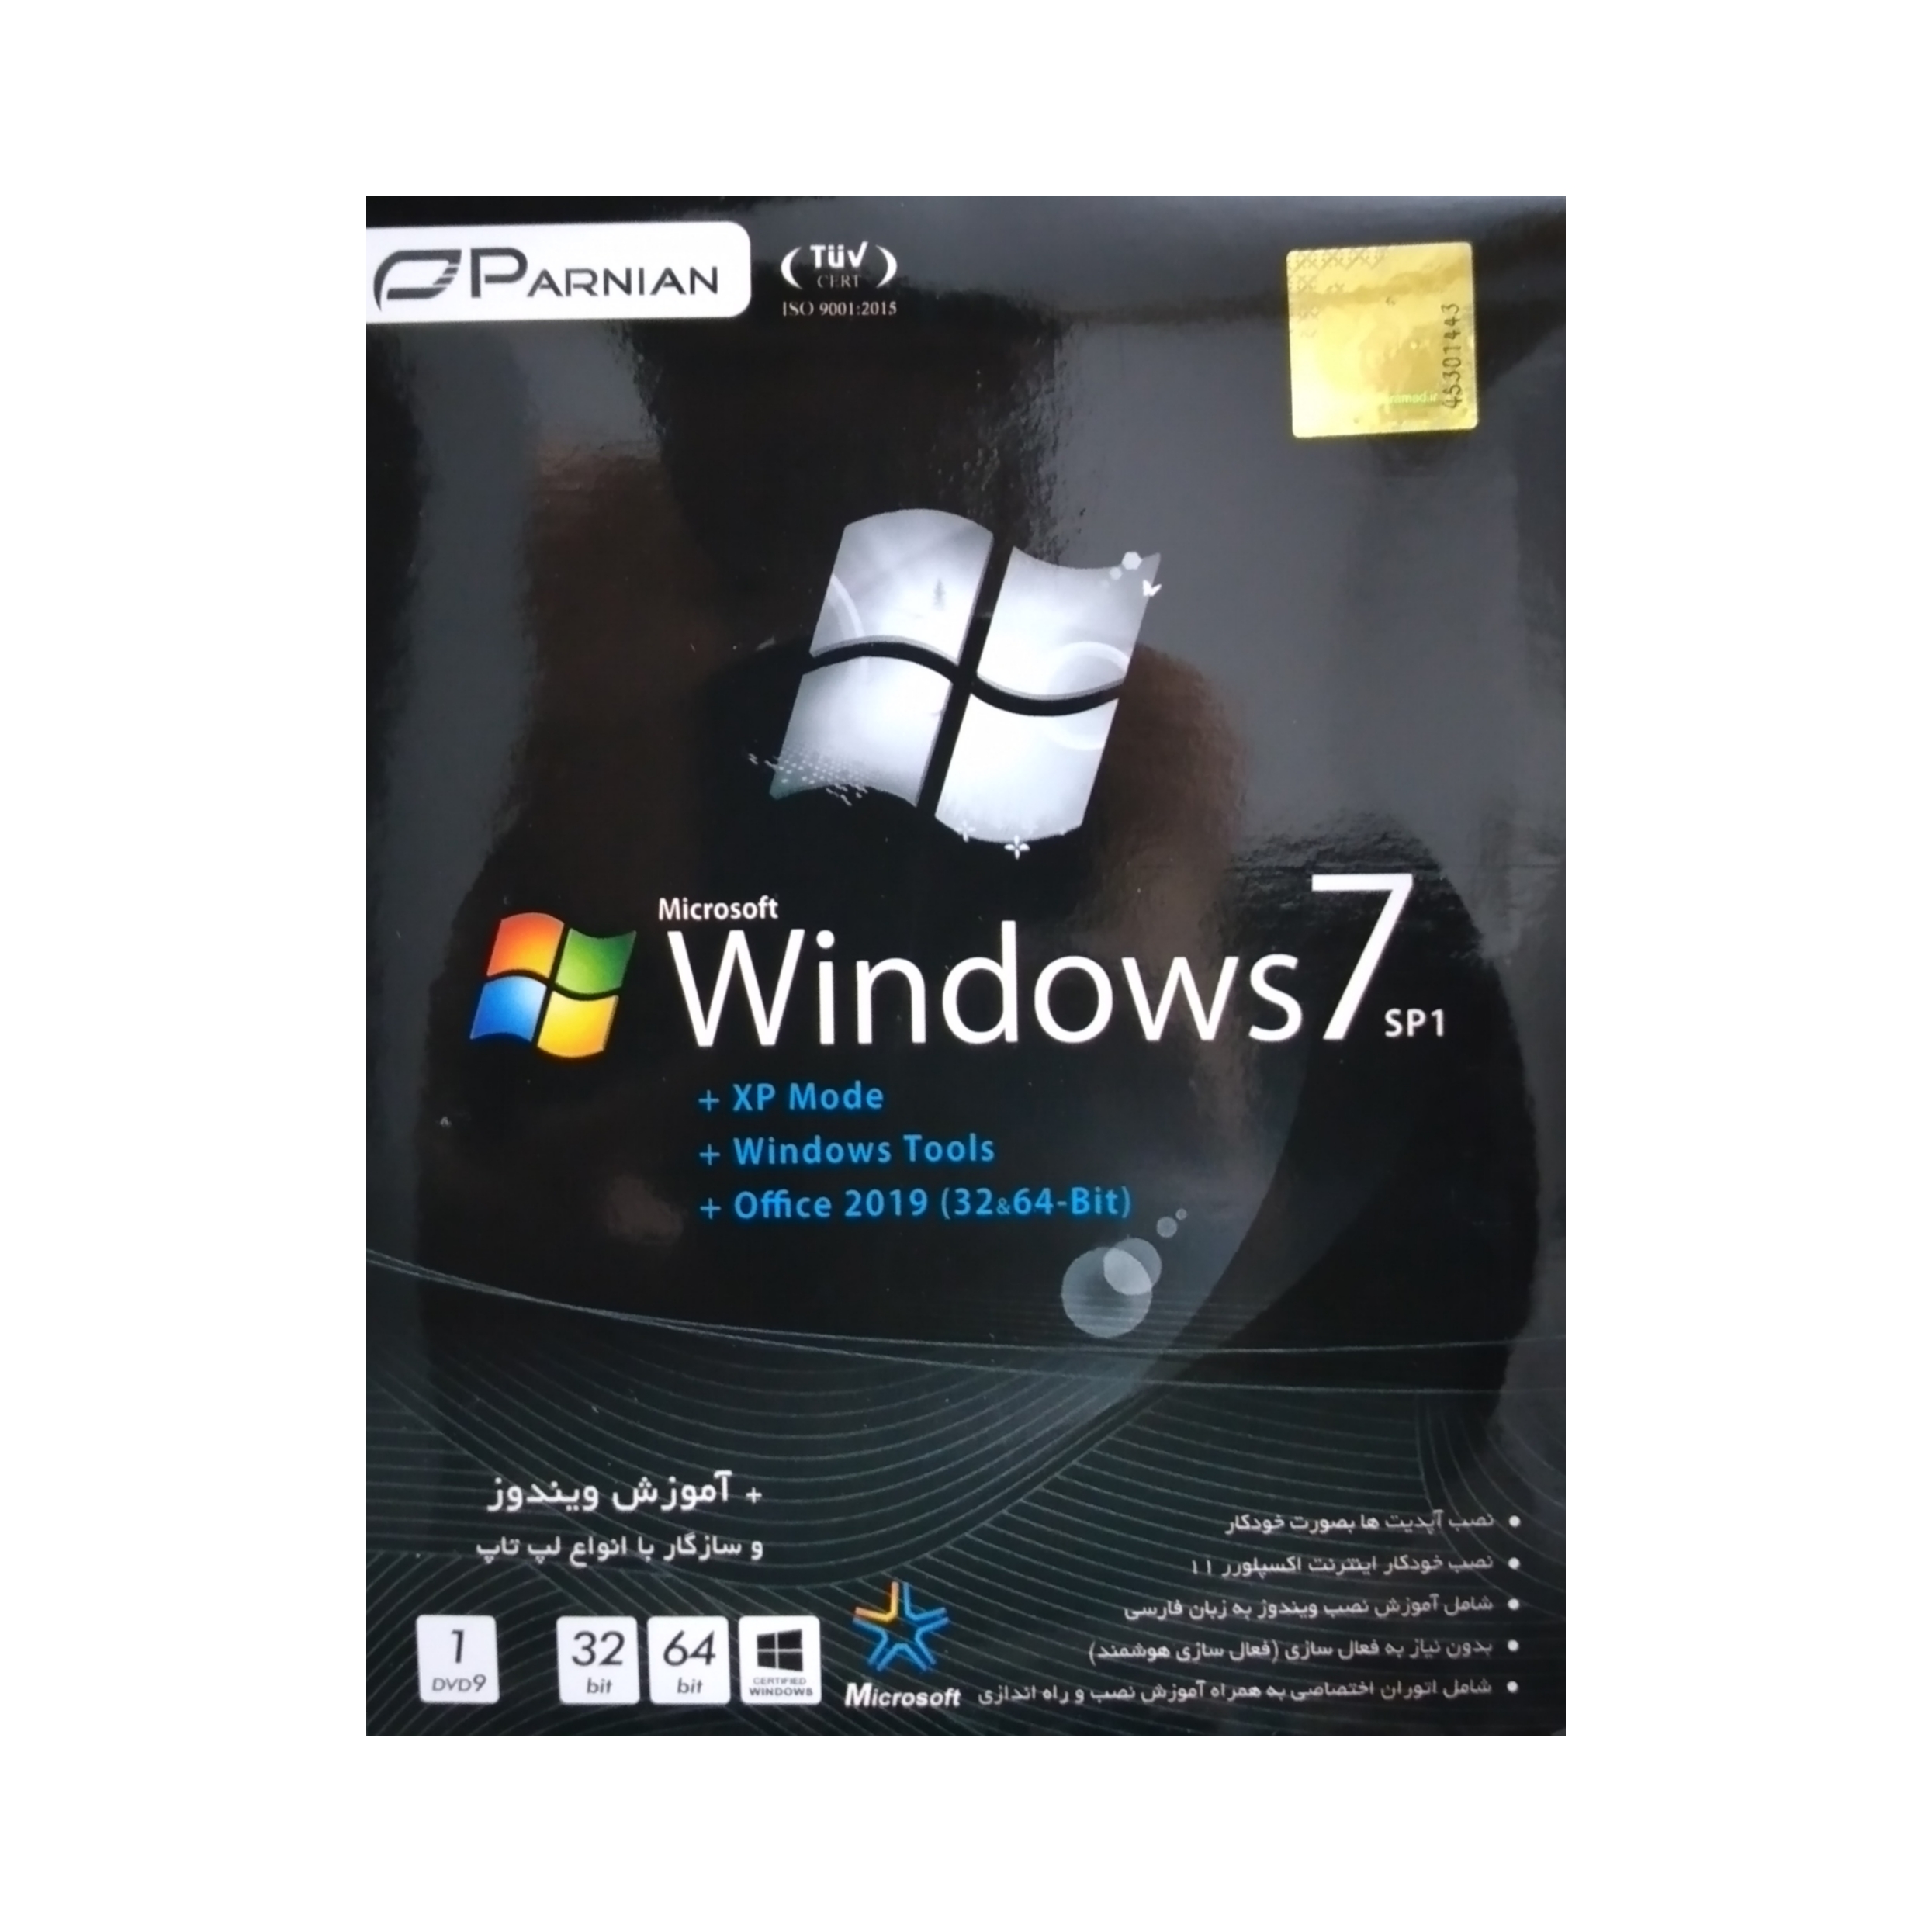 سیستم عامل SP1 Windows 7 نشر پرنیان